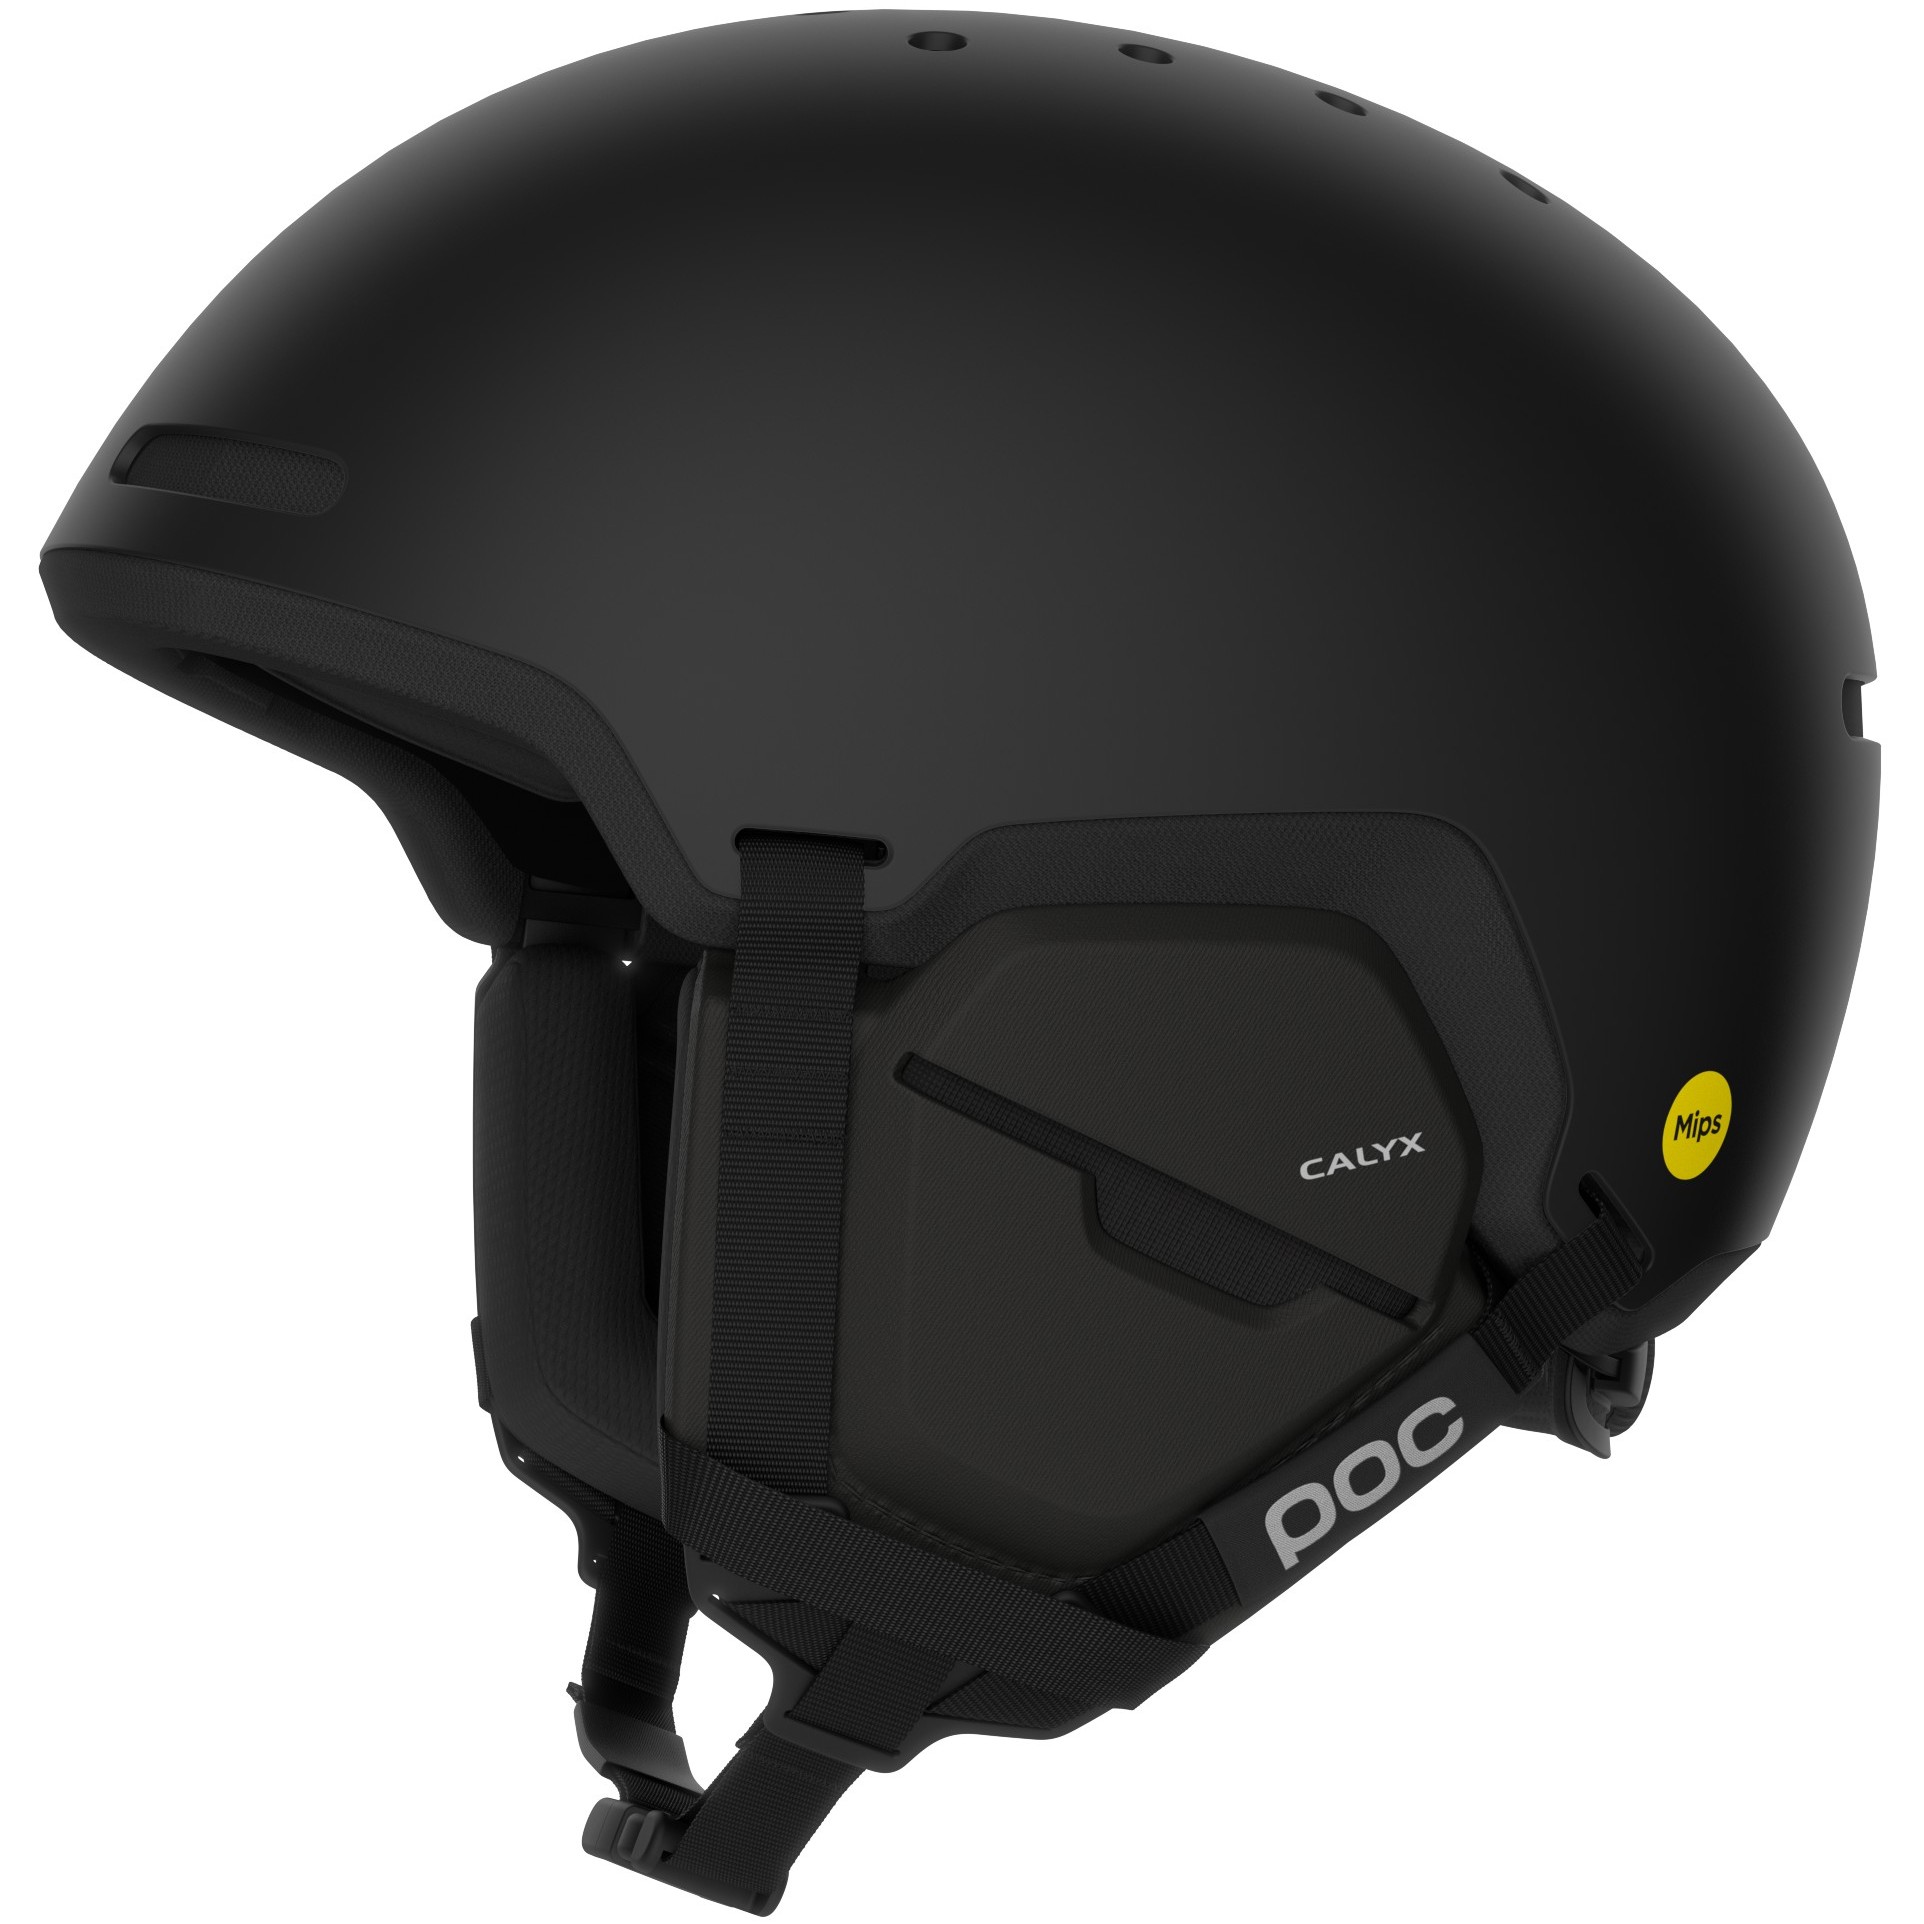 POC Calyx MIPS Ski/Snowboard Helmet